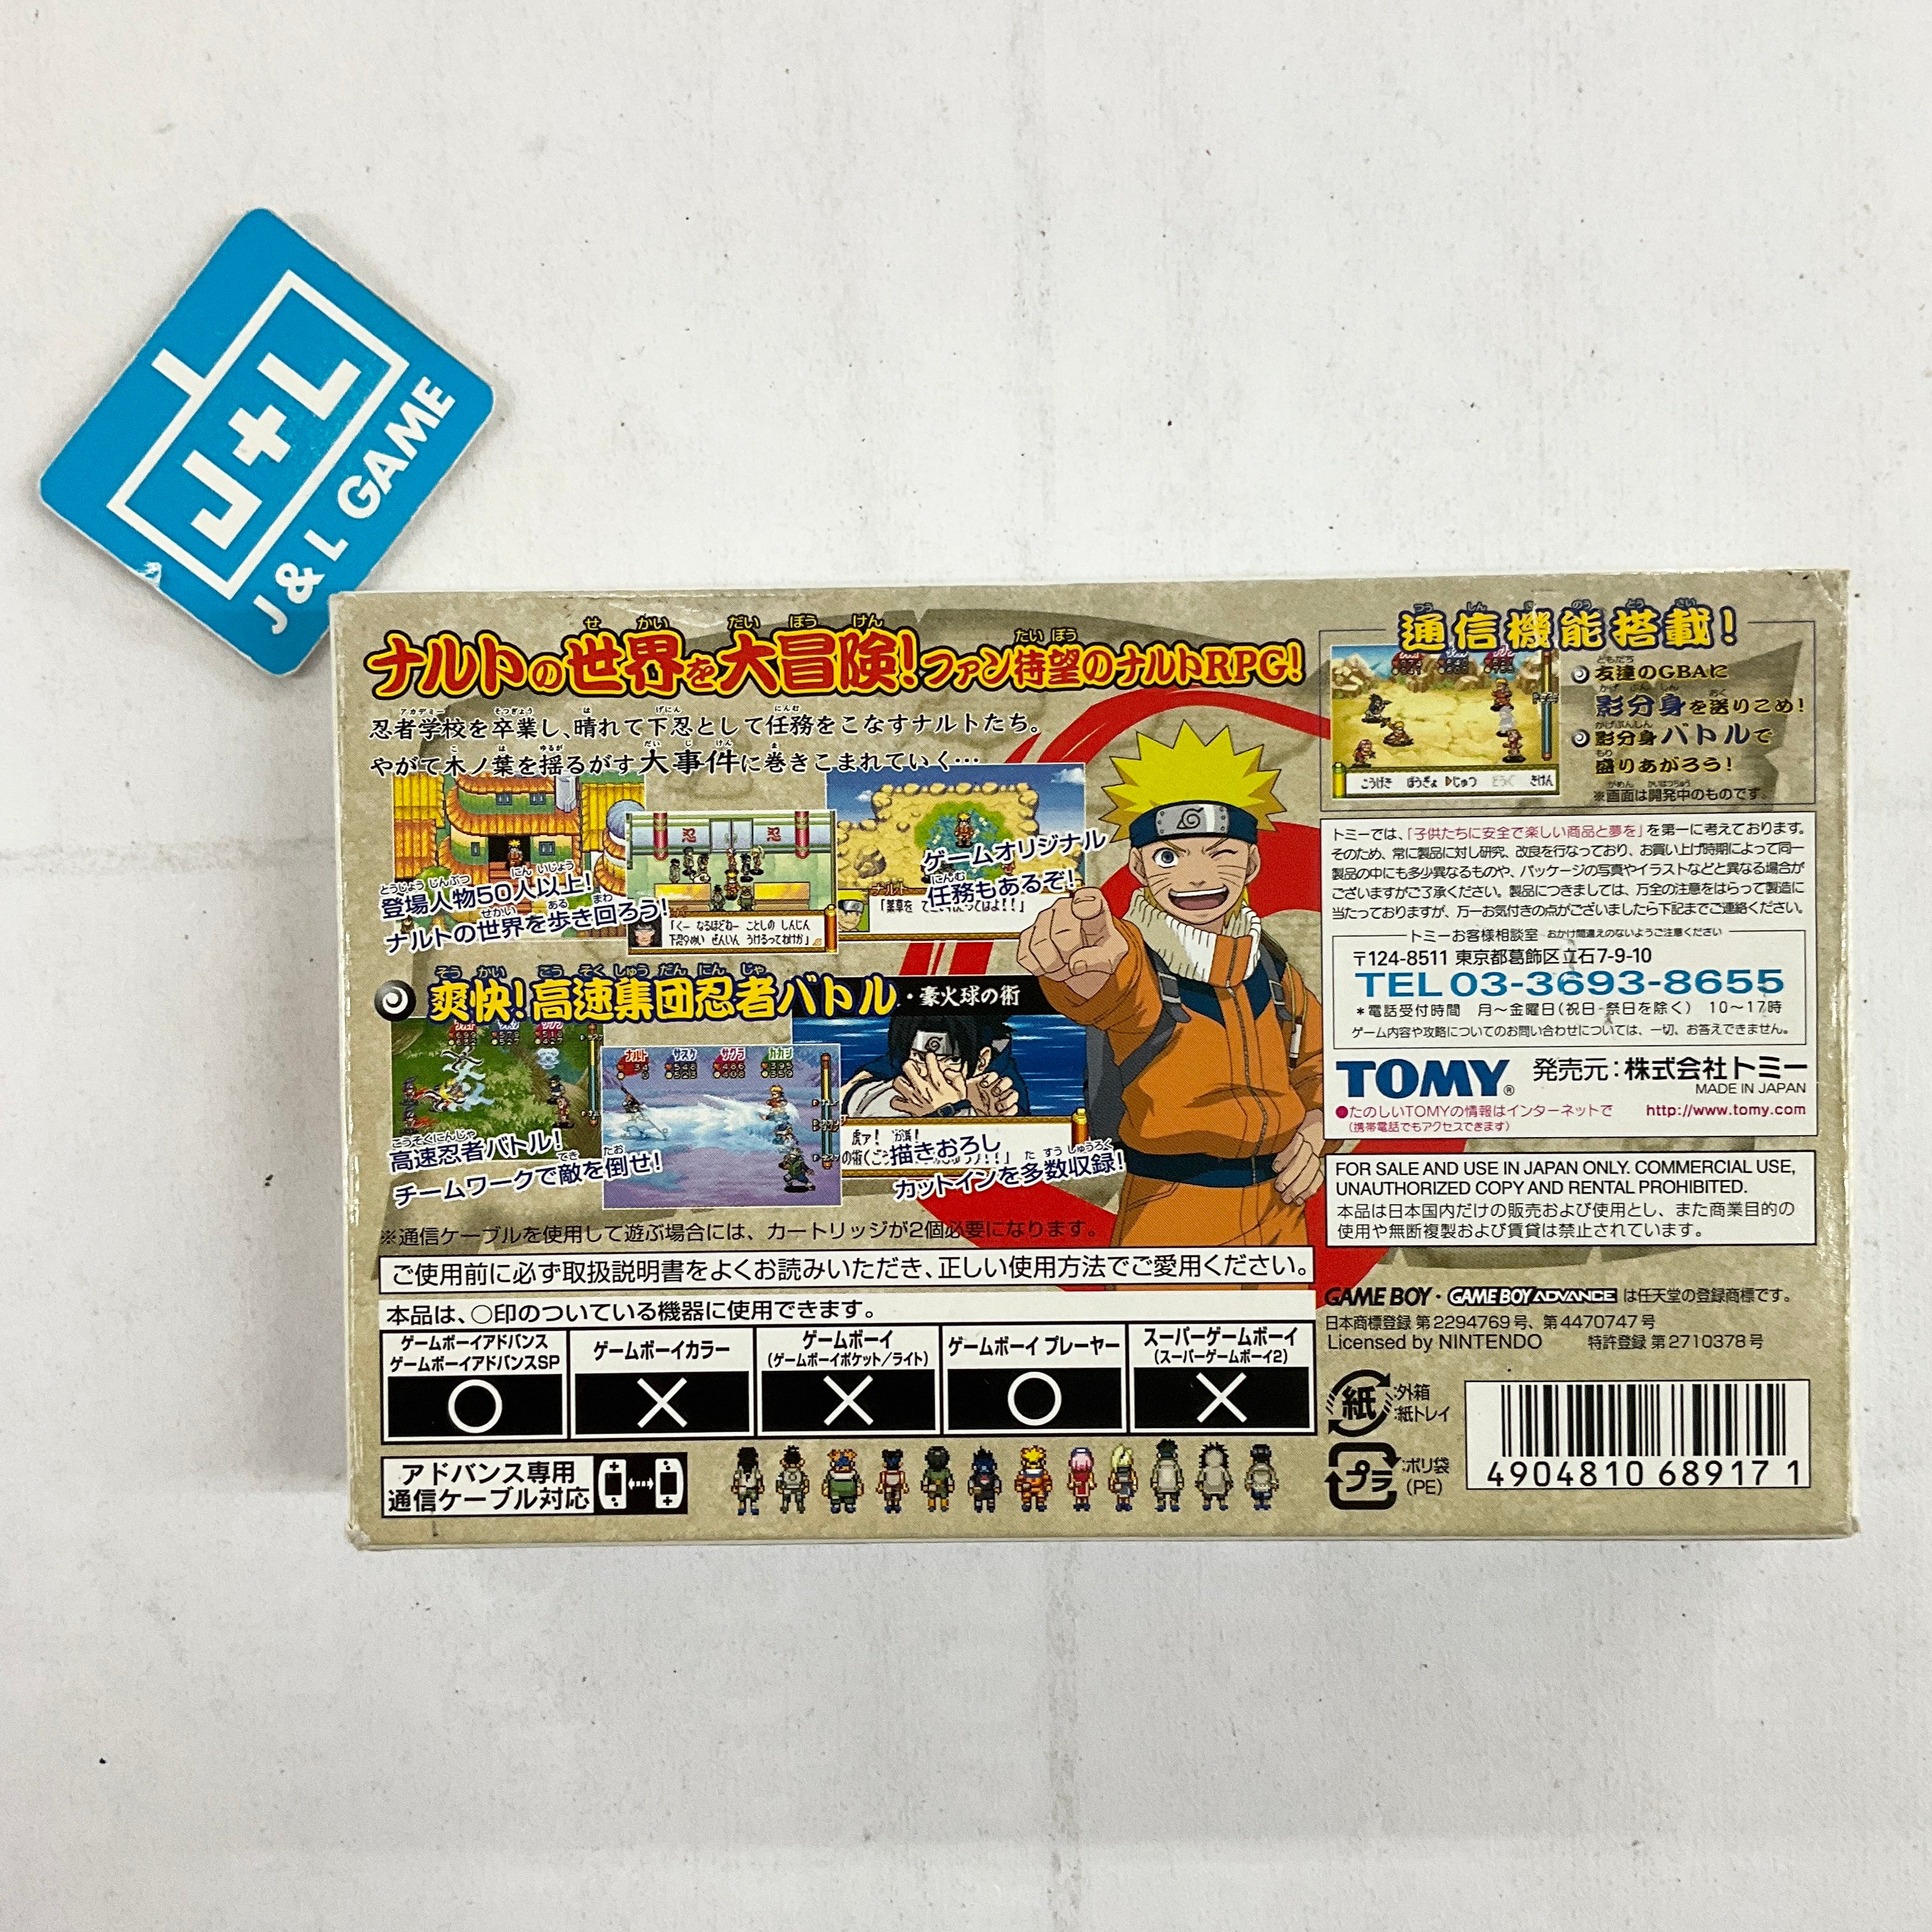 Naruto RPG: Uketsugareshi Hi no Ishi - (GBA) Game Boy Advance (Japanese Import) [Pre-Owned] Video Games Tomy Corporation   